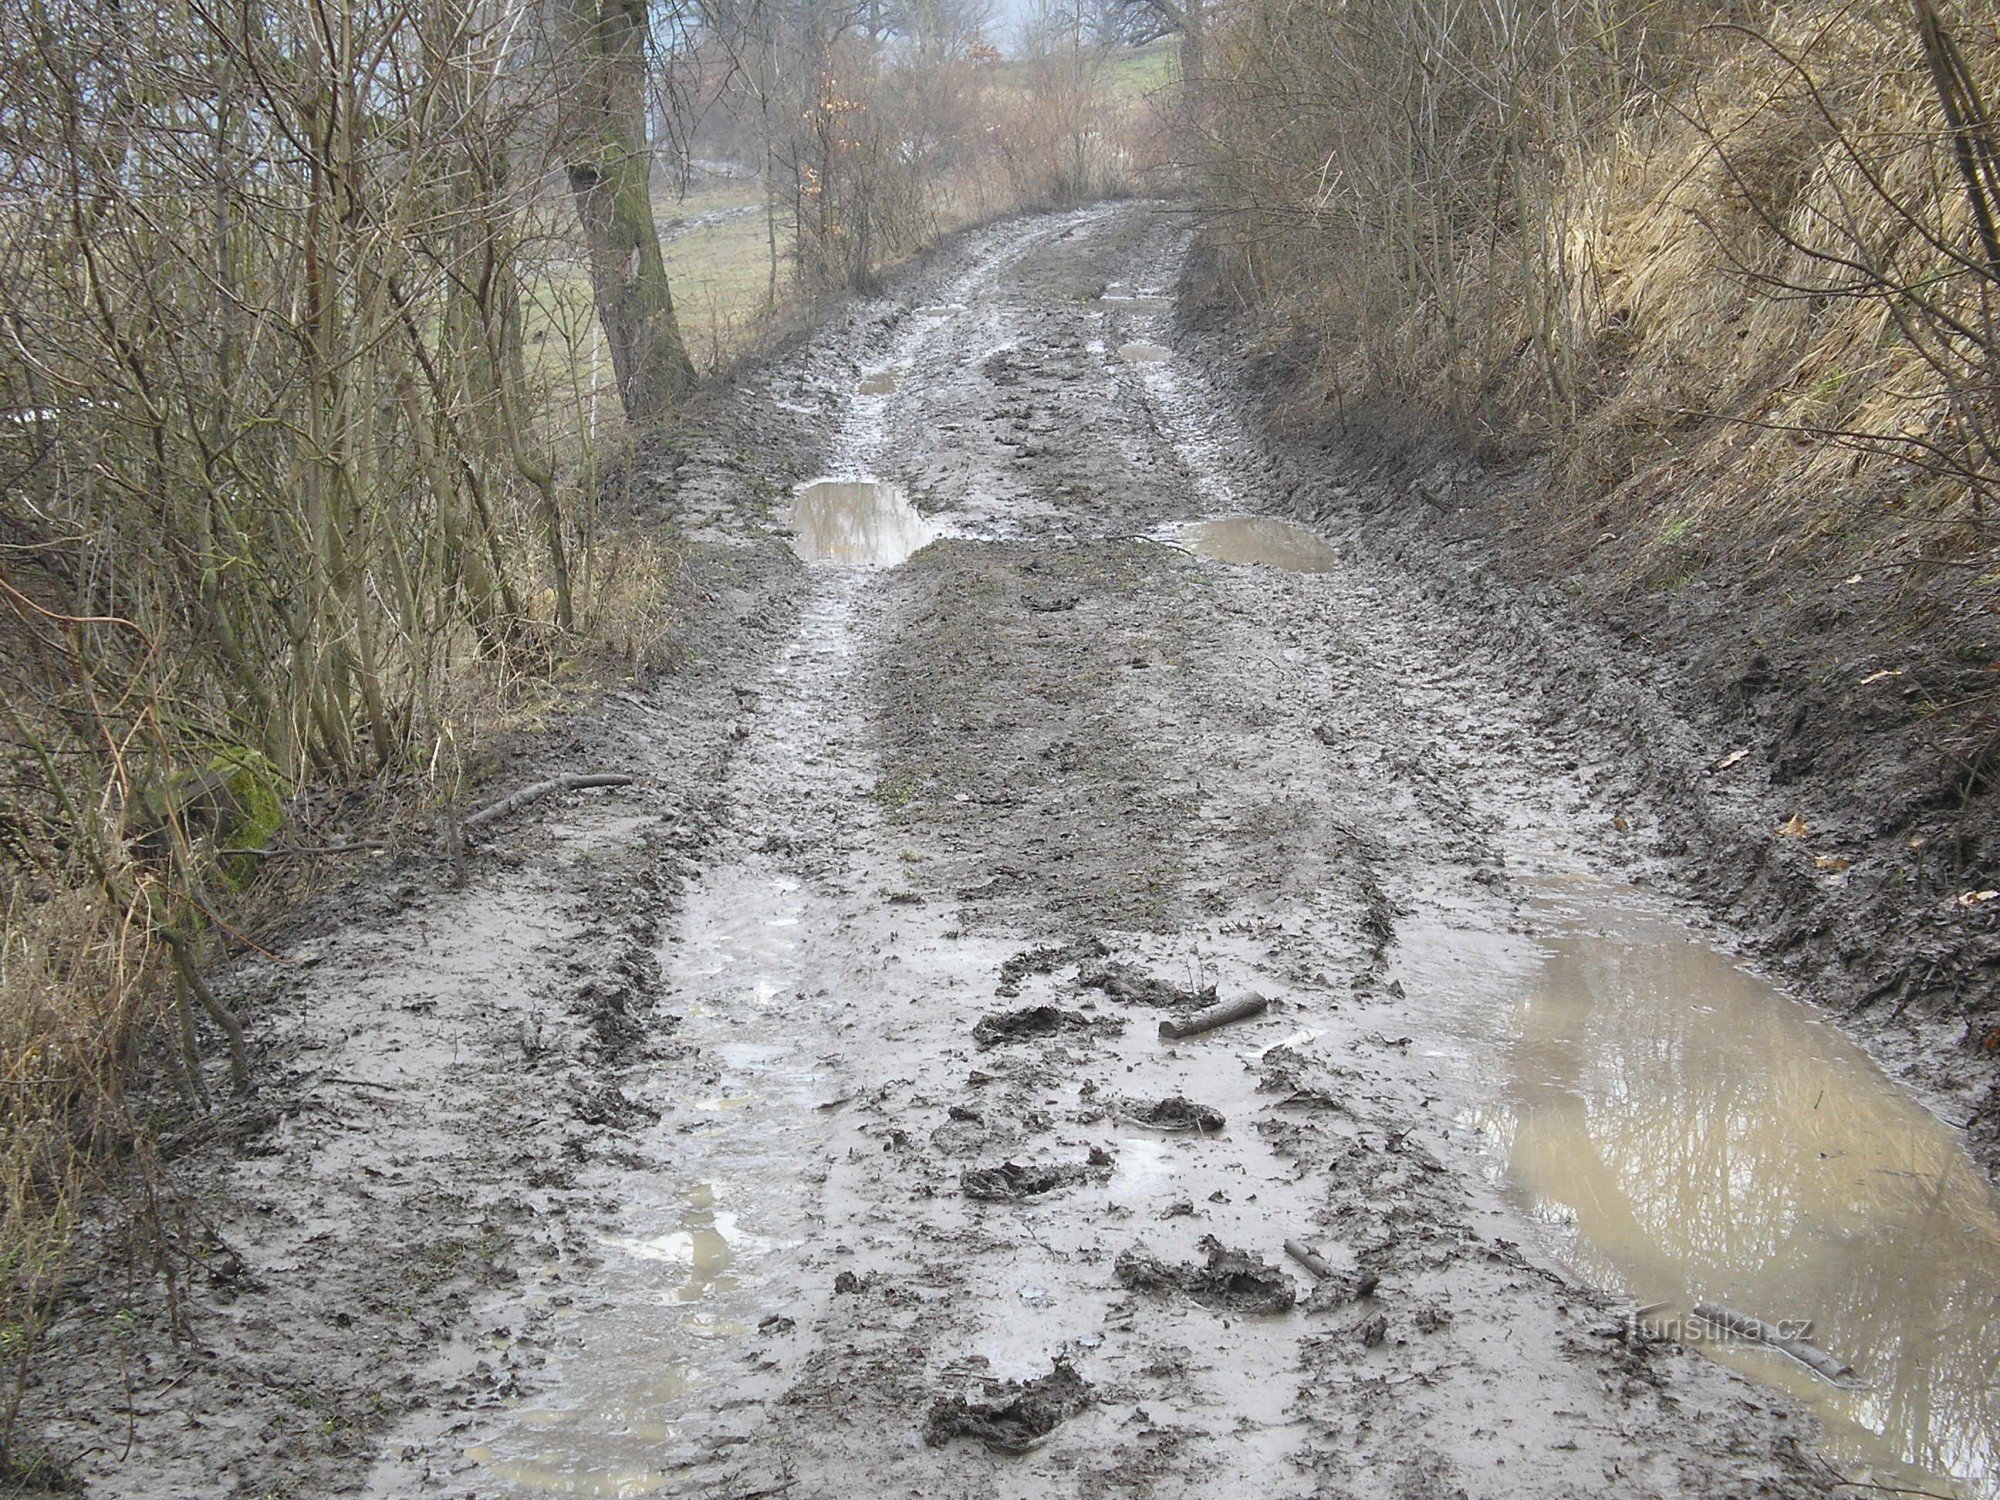 A estrada está lamacenta